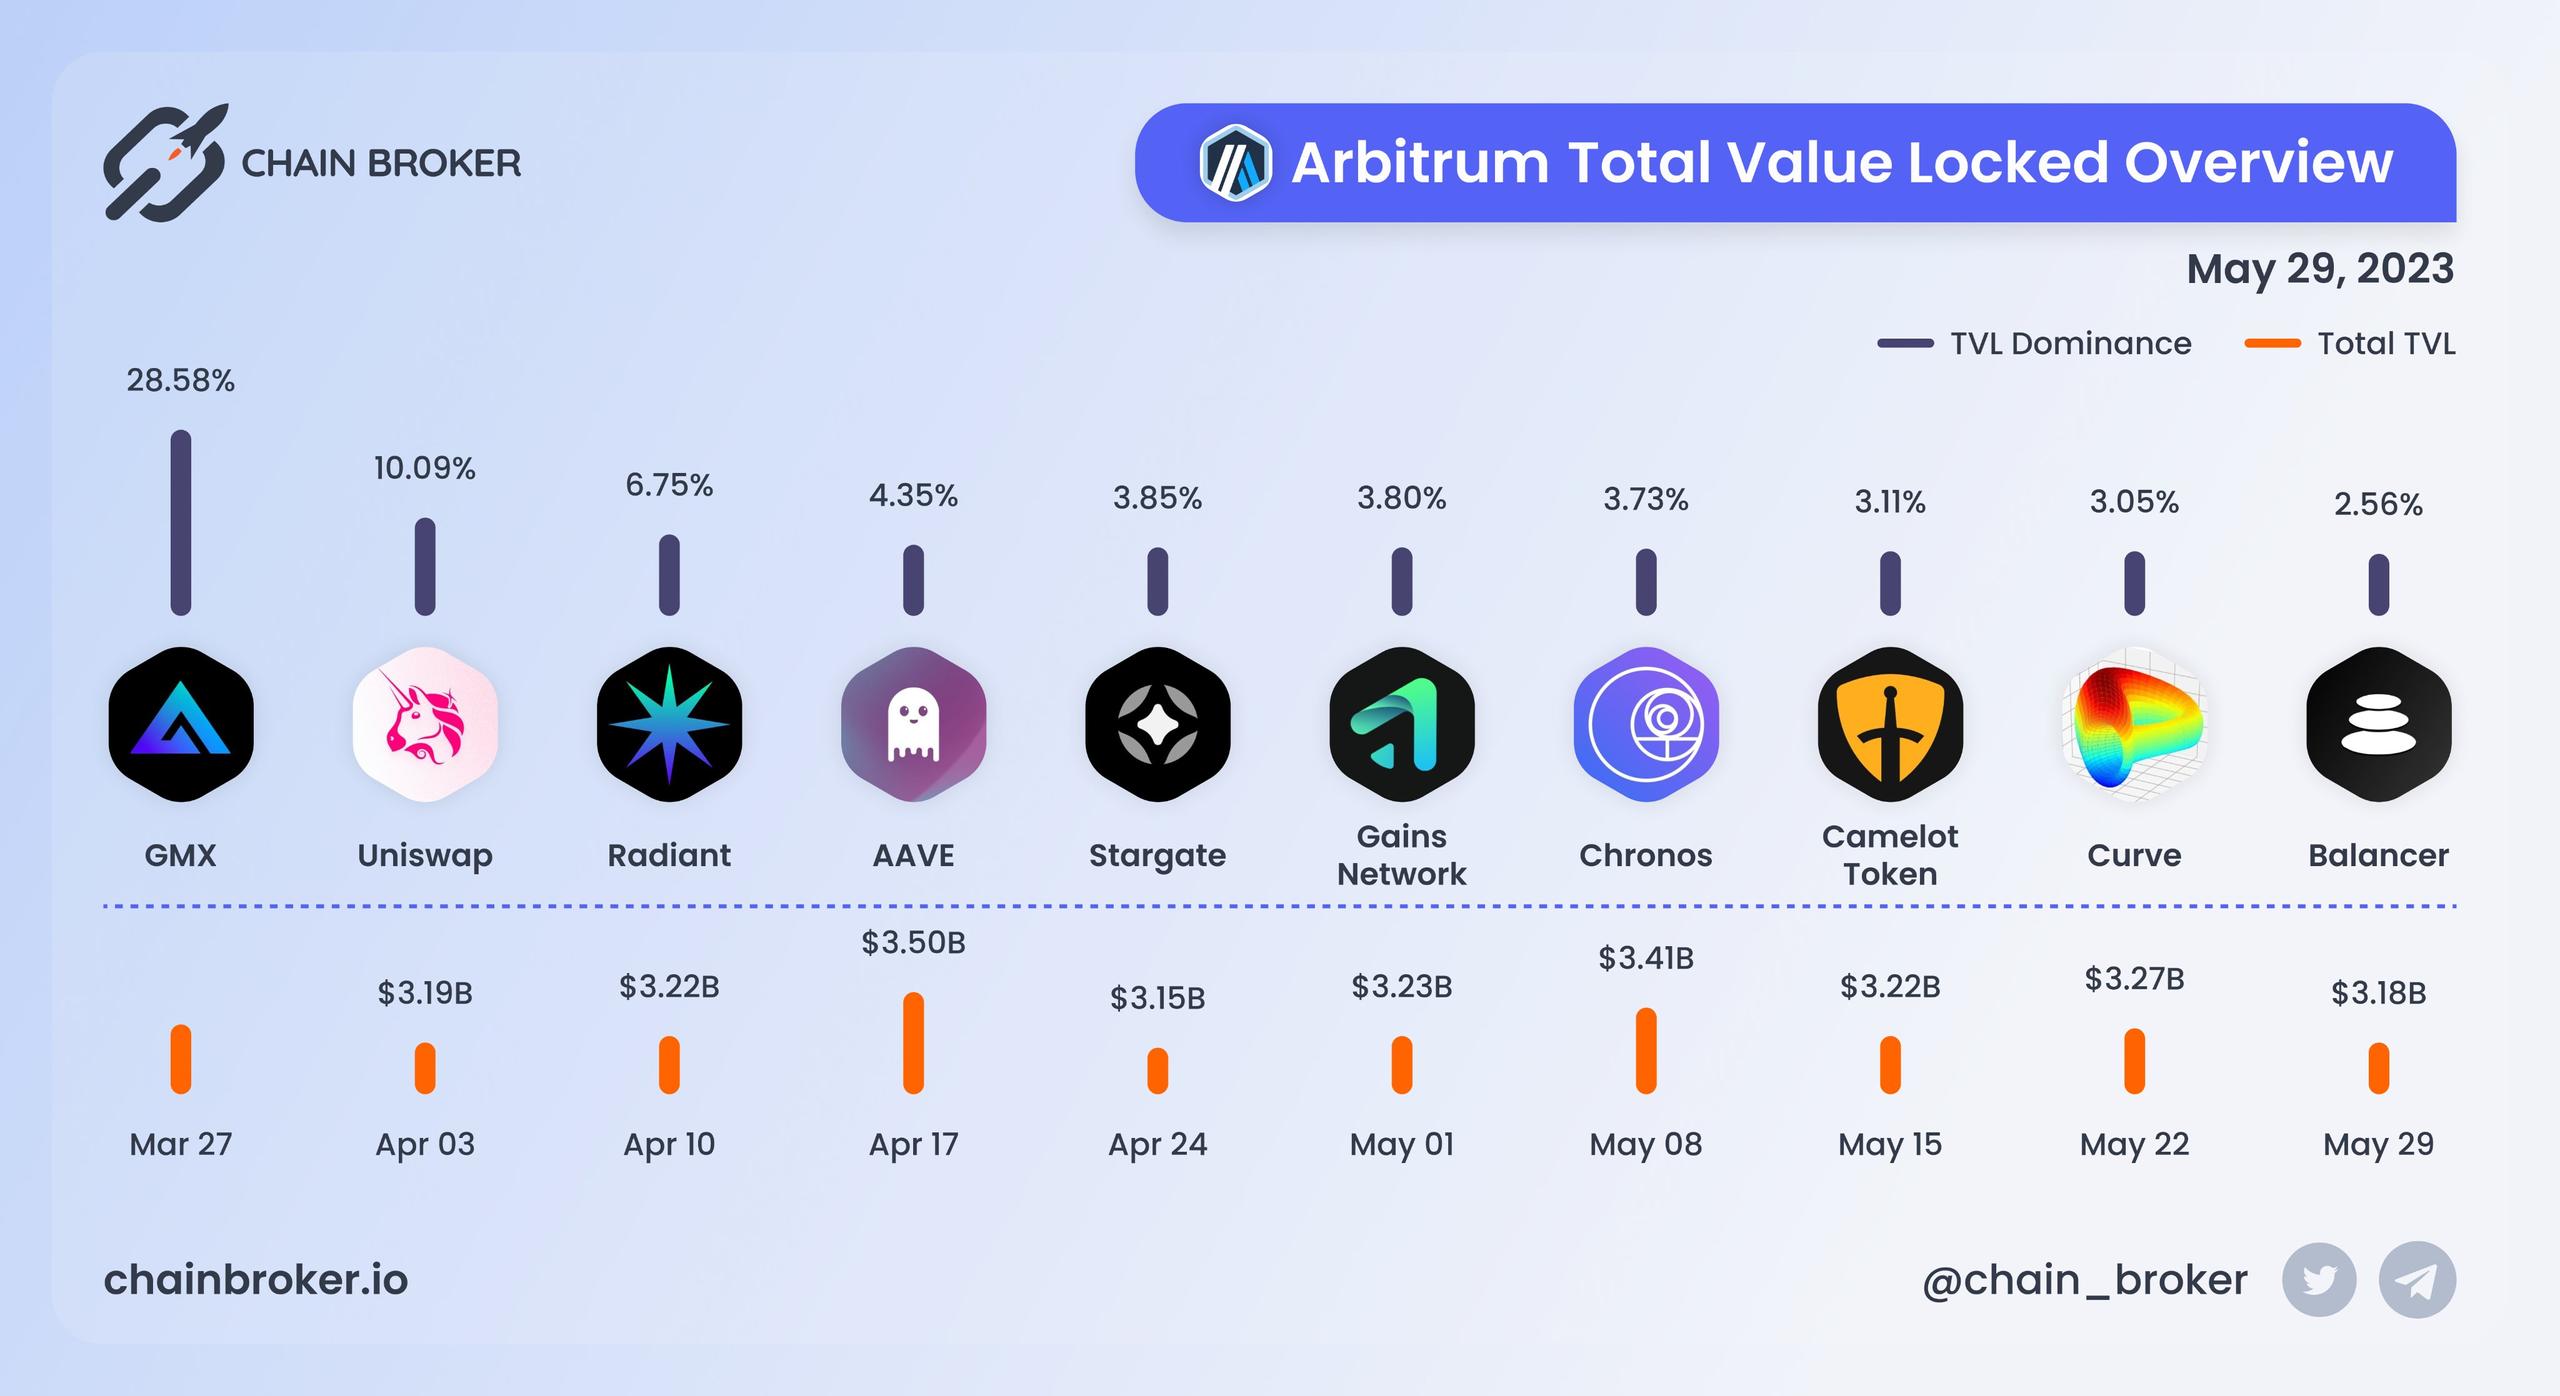 Arbitrum total value locked overview